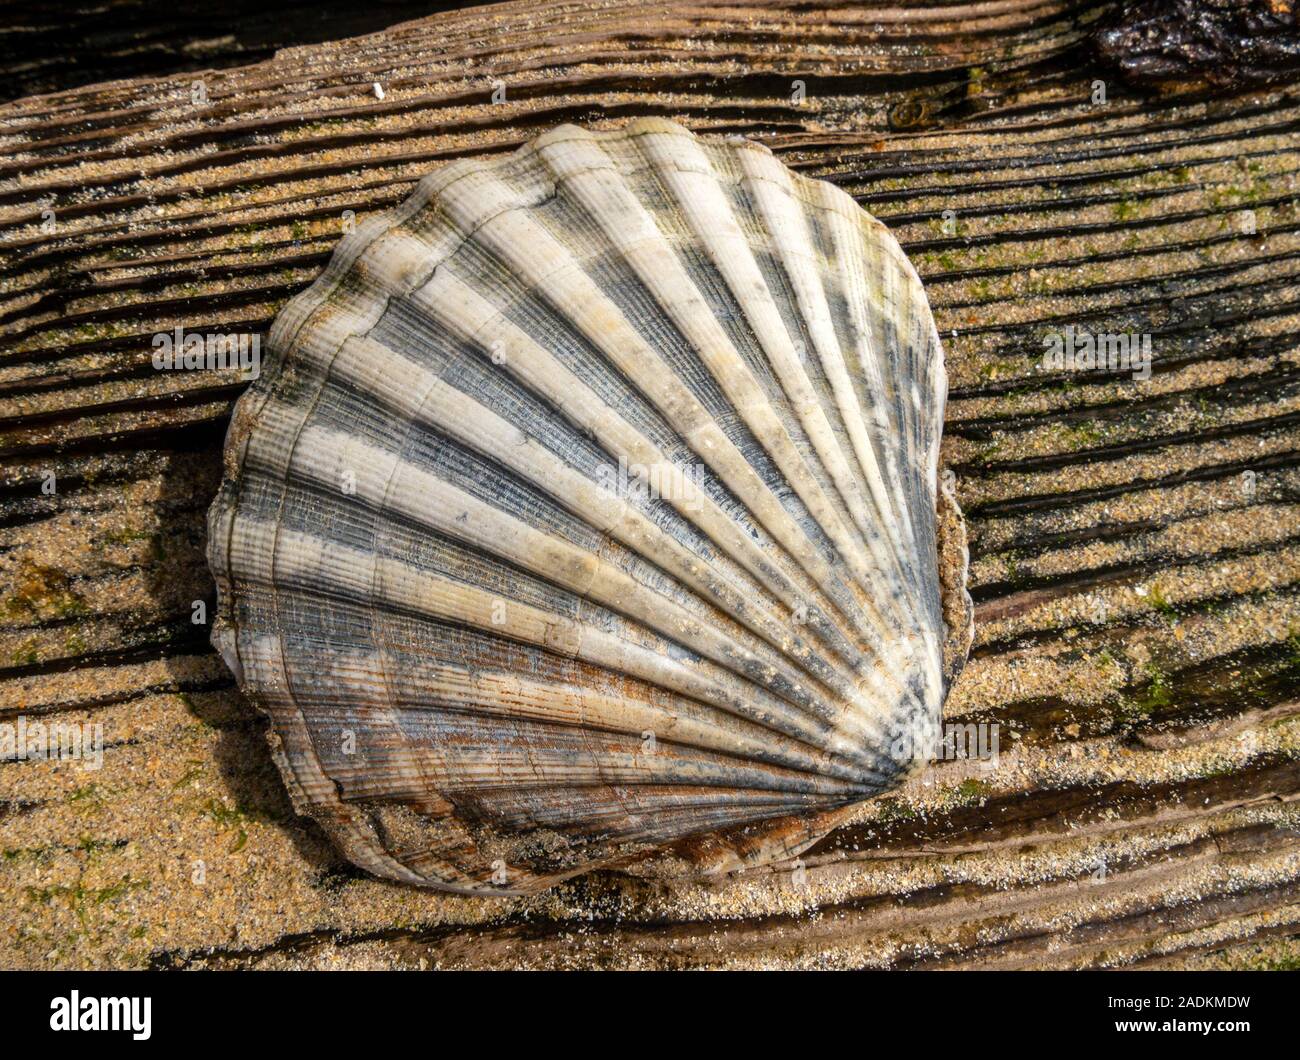 Half of a Great Scallop shell (Pecten maximus) lying on sandy wood grain of old driftwood, Scotland, UK Stock Photo